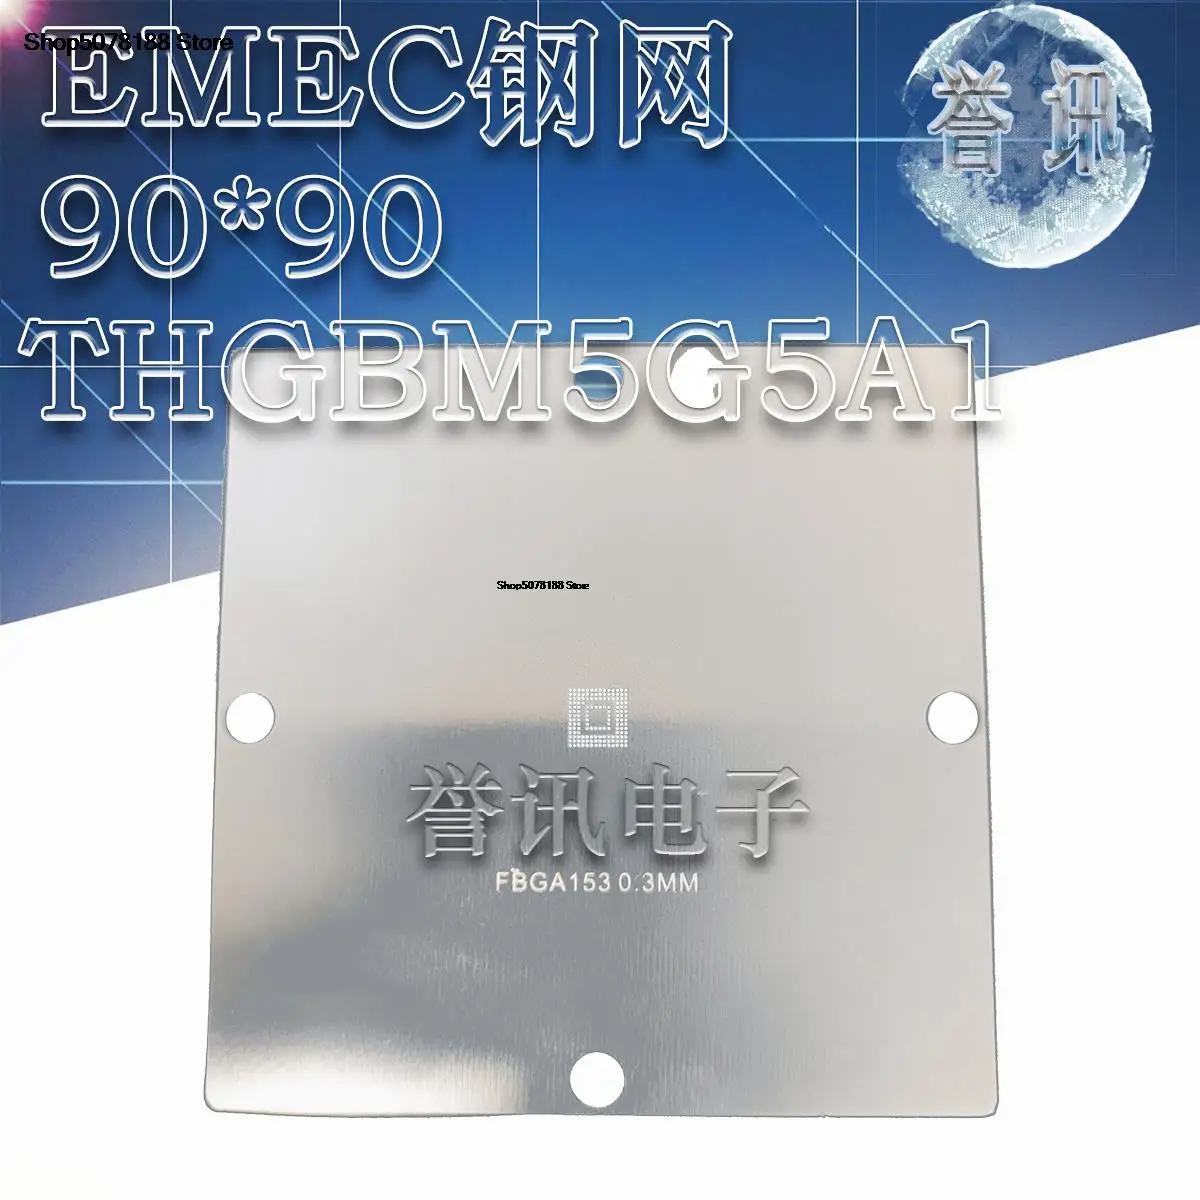 

EMEC/EMMC FBGA153 0.3MM 90*90 THGBM5G5A1JBAIR BG5D1 Original and new fast shipping